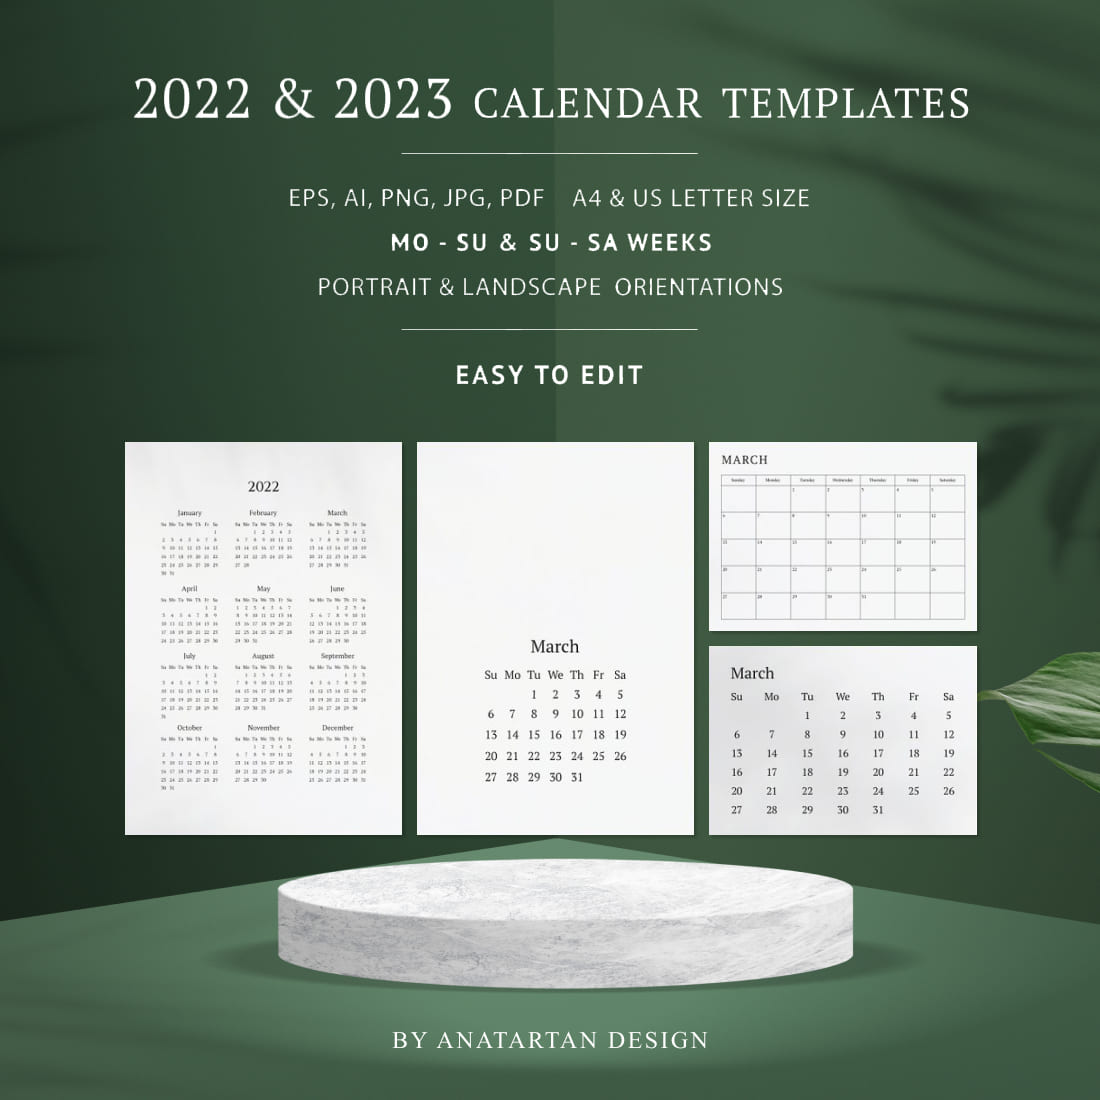 2022 2023 calendar templates cover image.